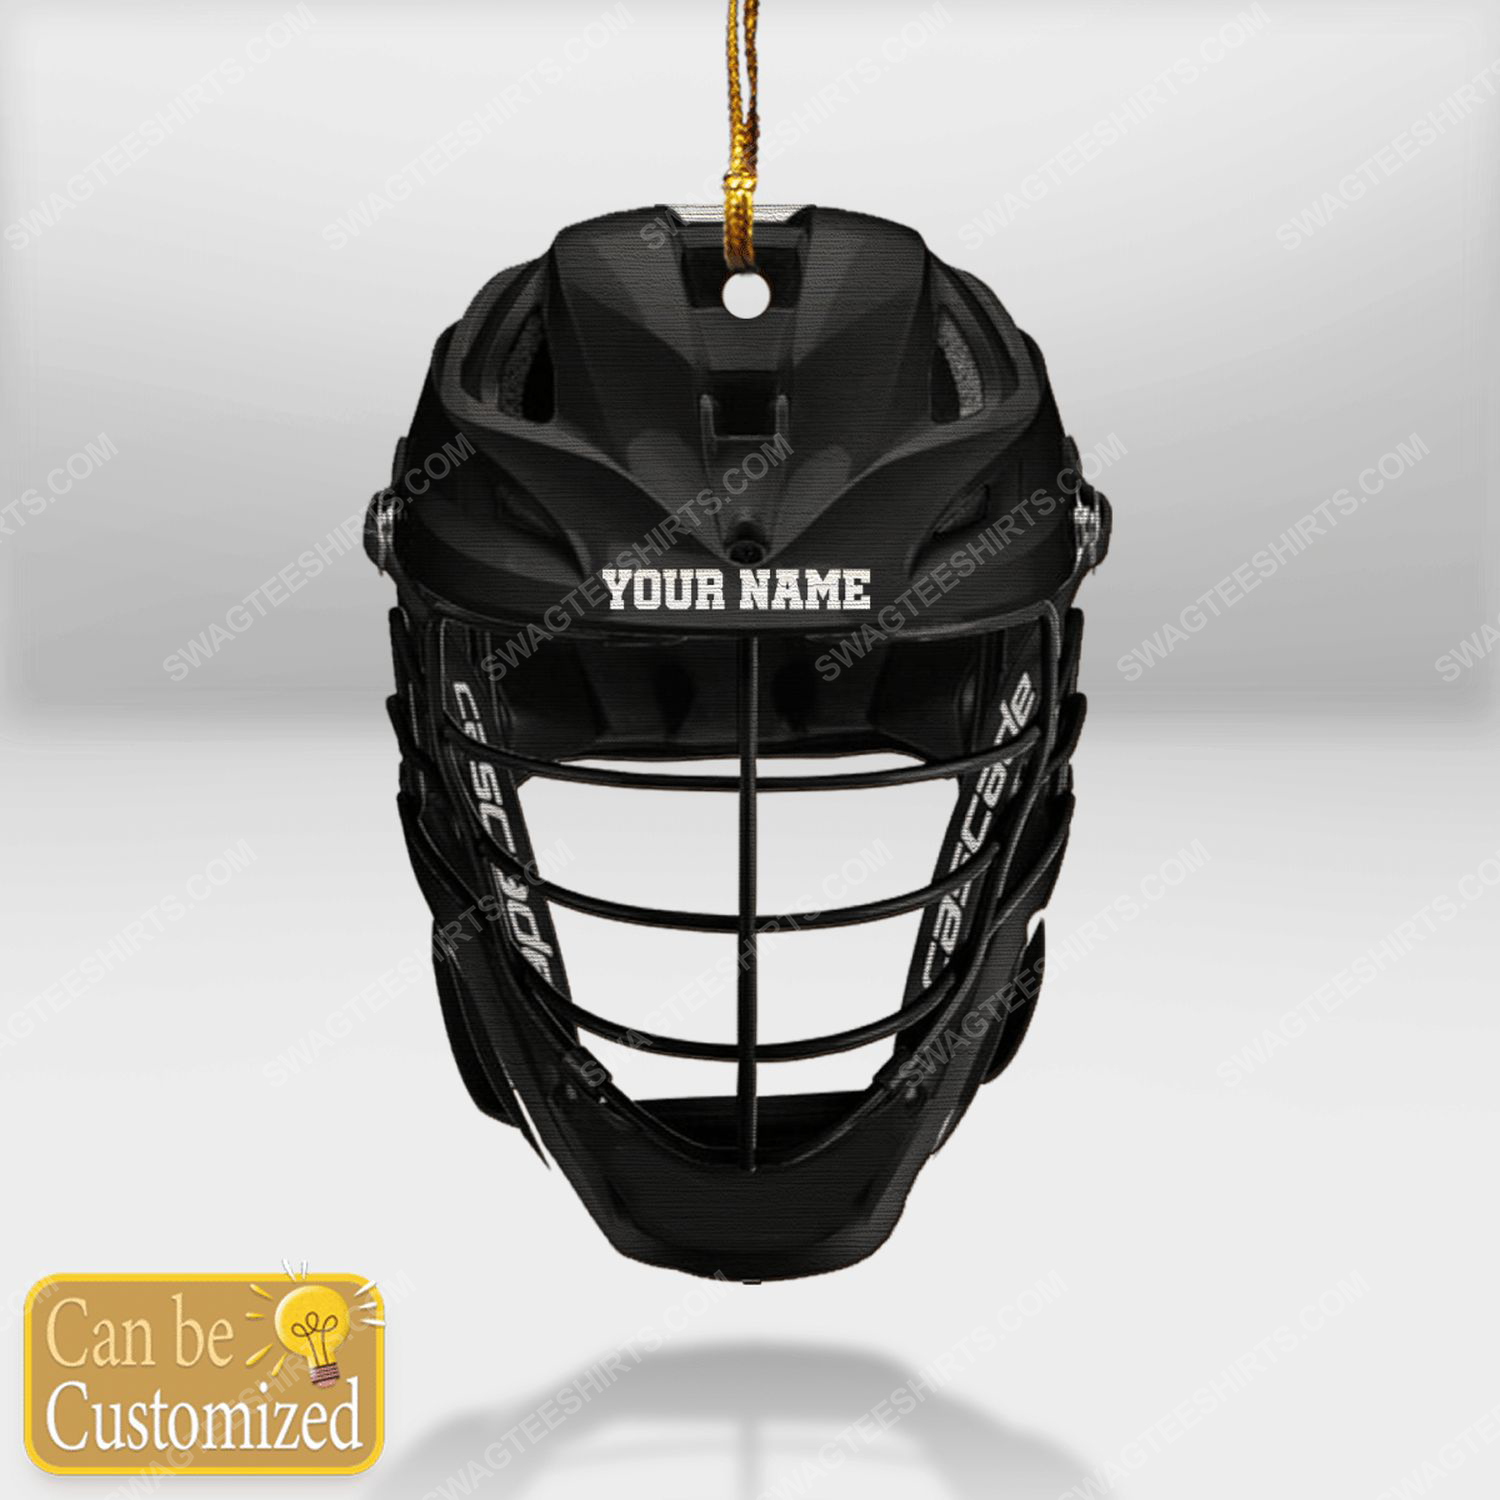 Custom lacrosse helmet black mask christmas gift ornament 1 - Copy